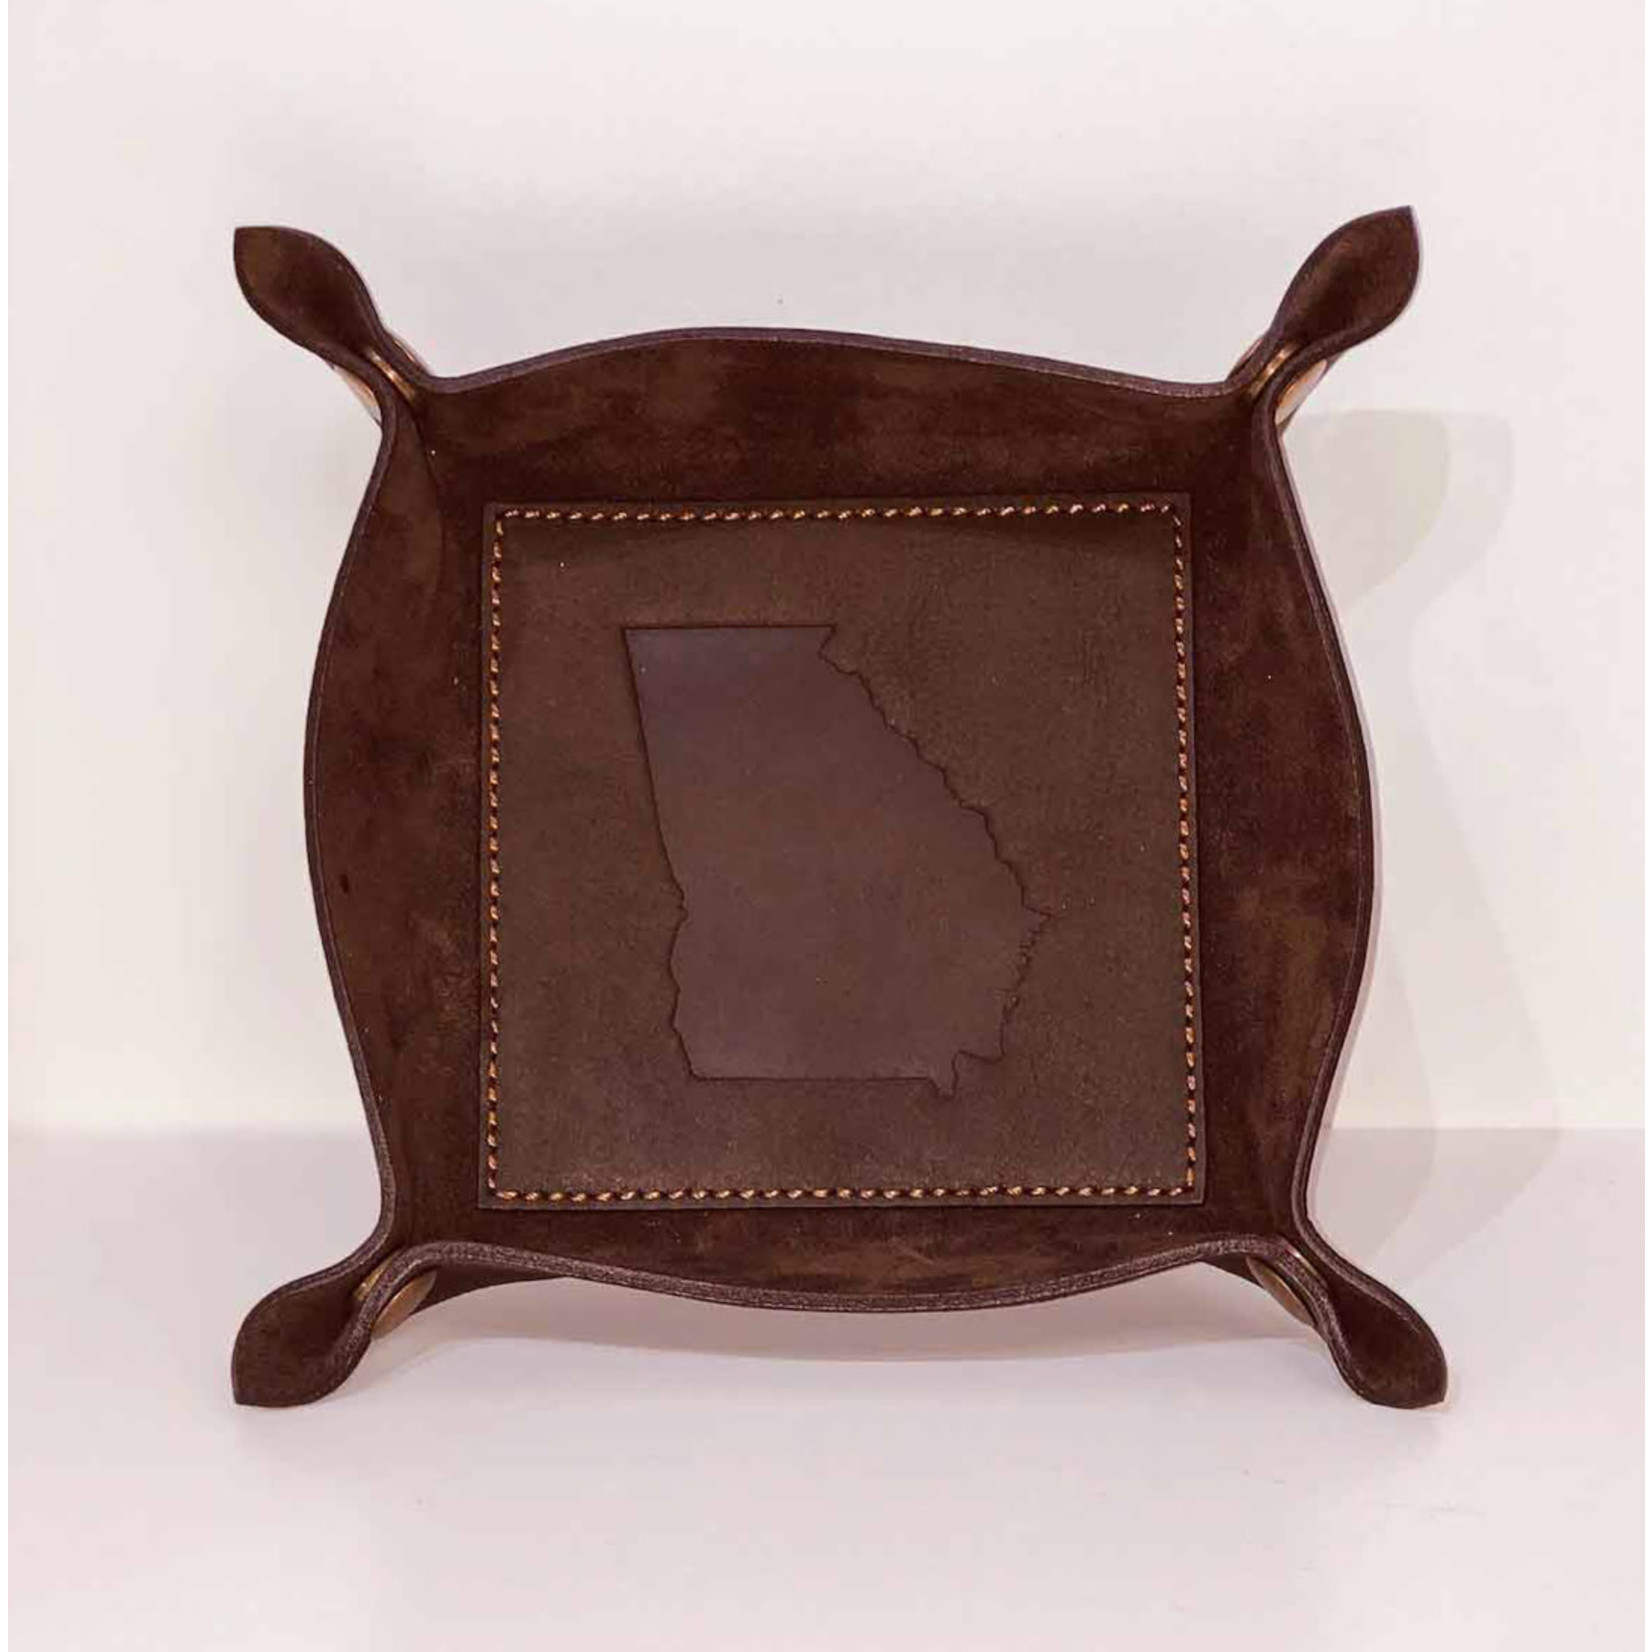 The Royal Standard Georgia Leather Embossed Valet Tray Dark Brown